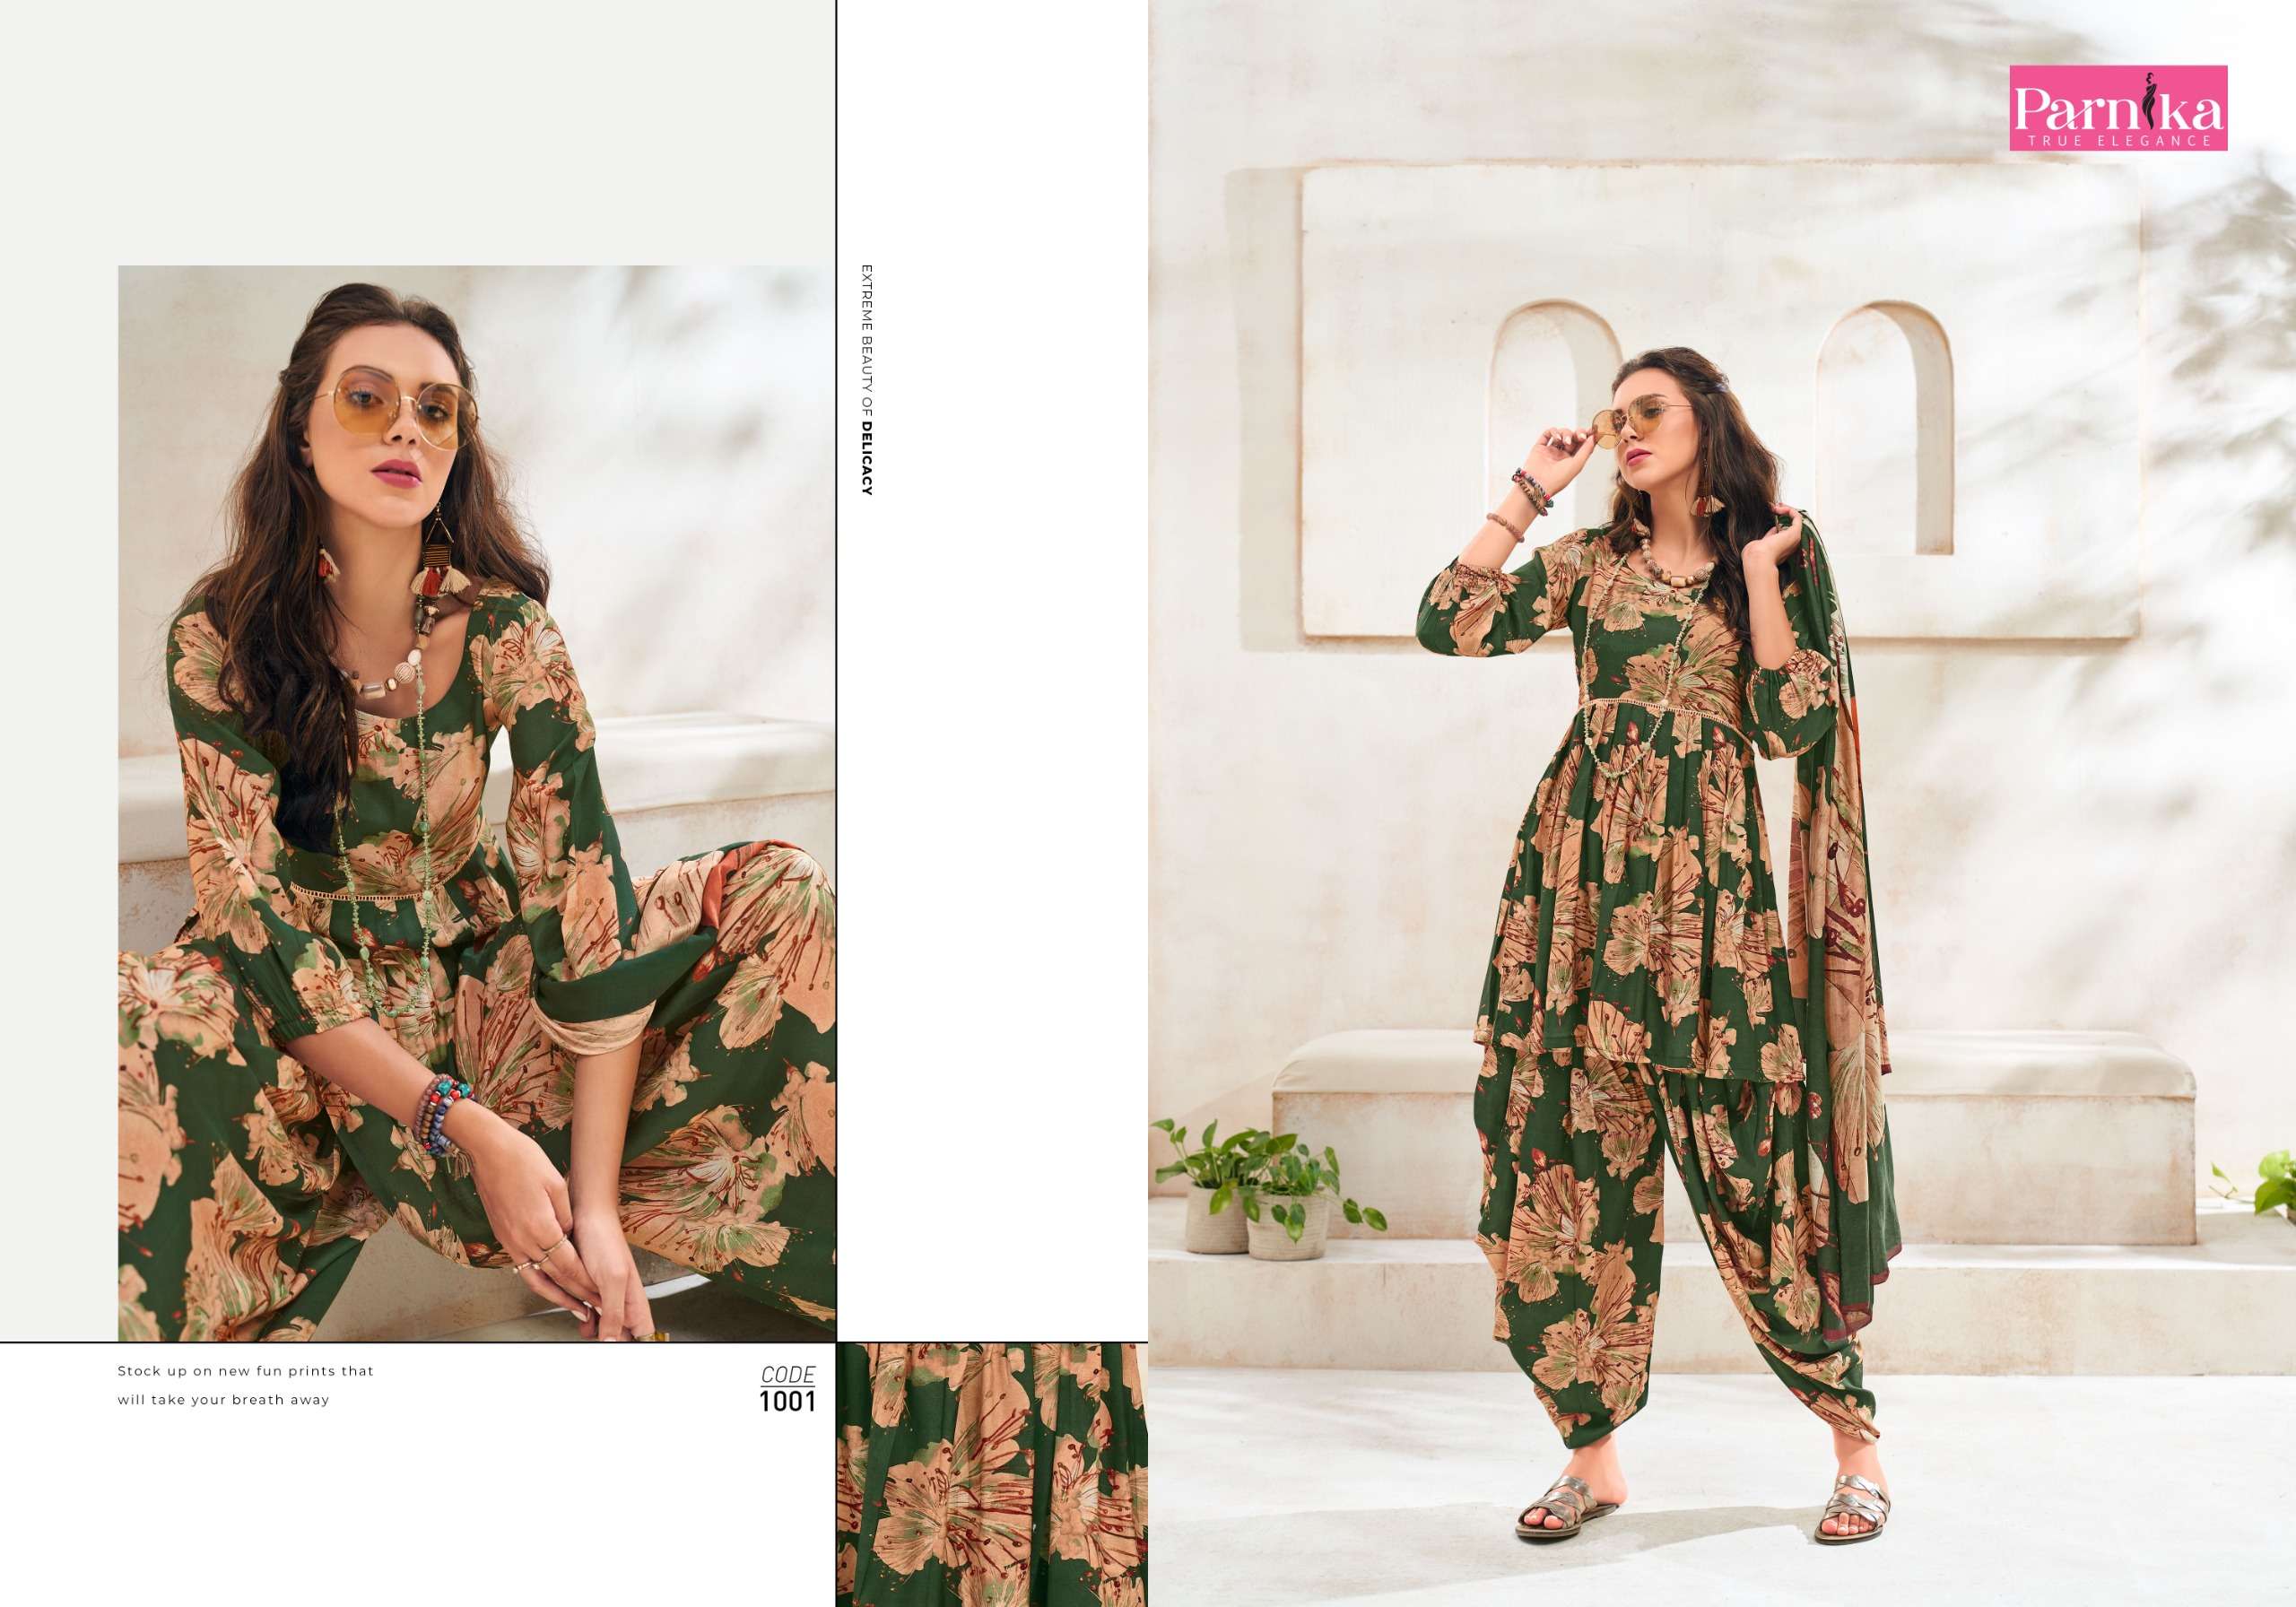 lctm overseas blooming silk exclusive print salwar suit catalog